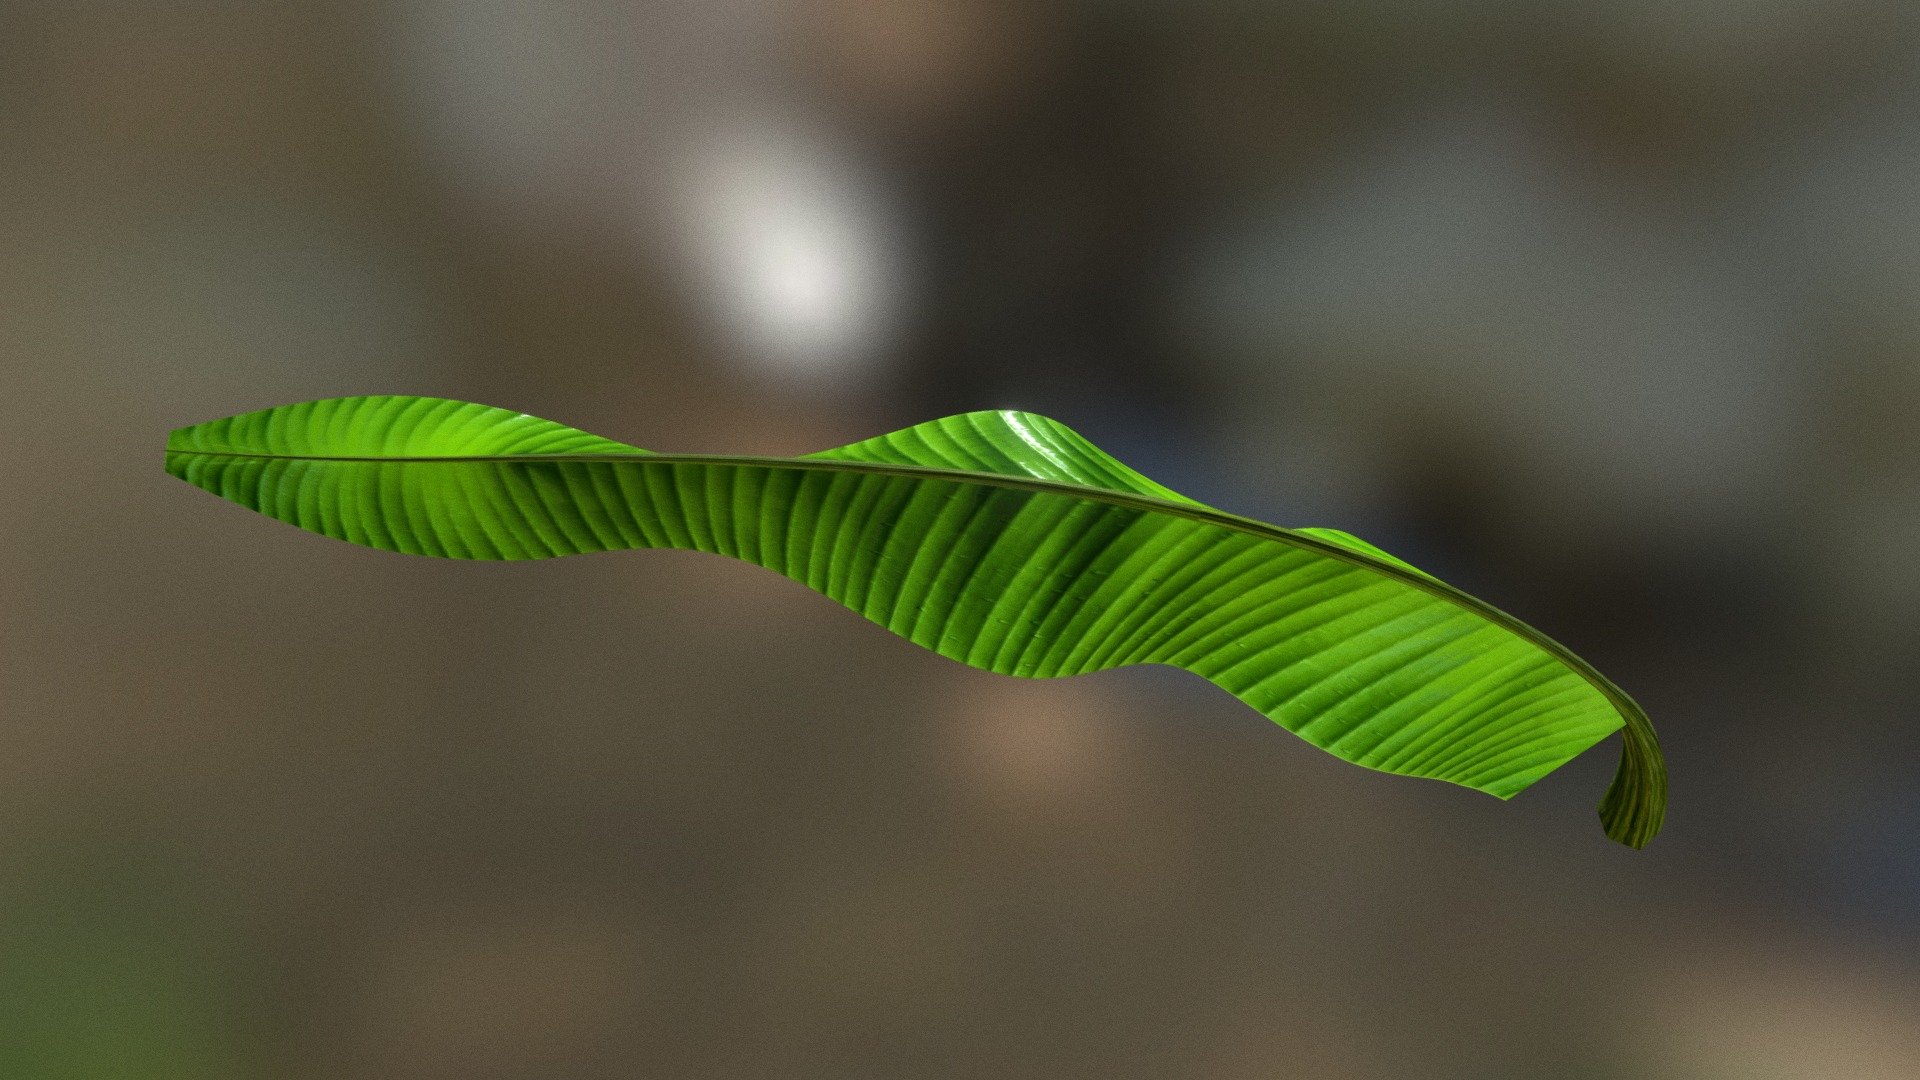 Banana leaf simulated with AMAPstudio http://amapstudio.cirad.fr/ - Banana leaf - 3D model by Sébastien Griffon (@griffon.sebastien) 3d model